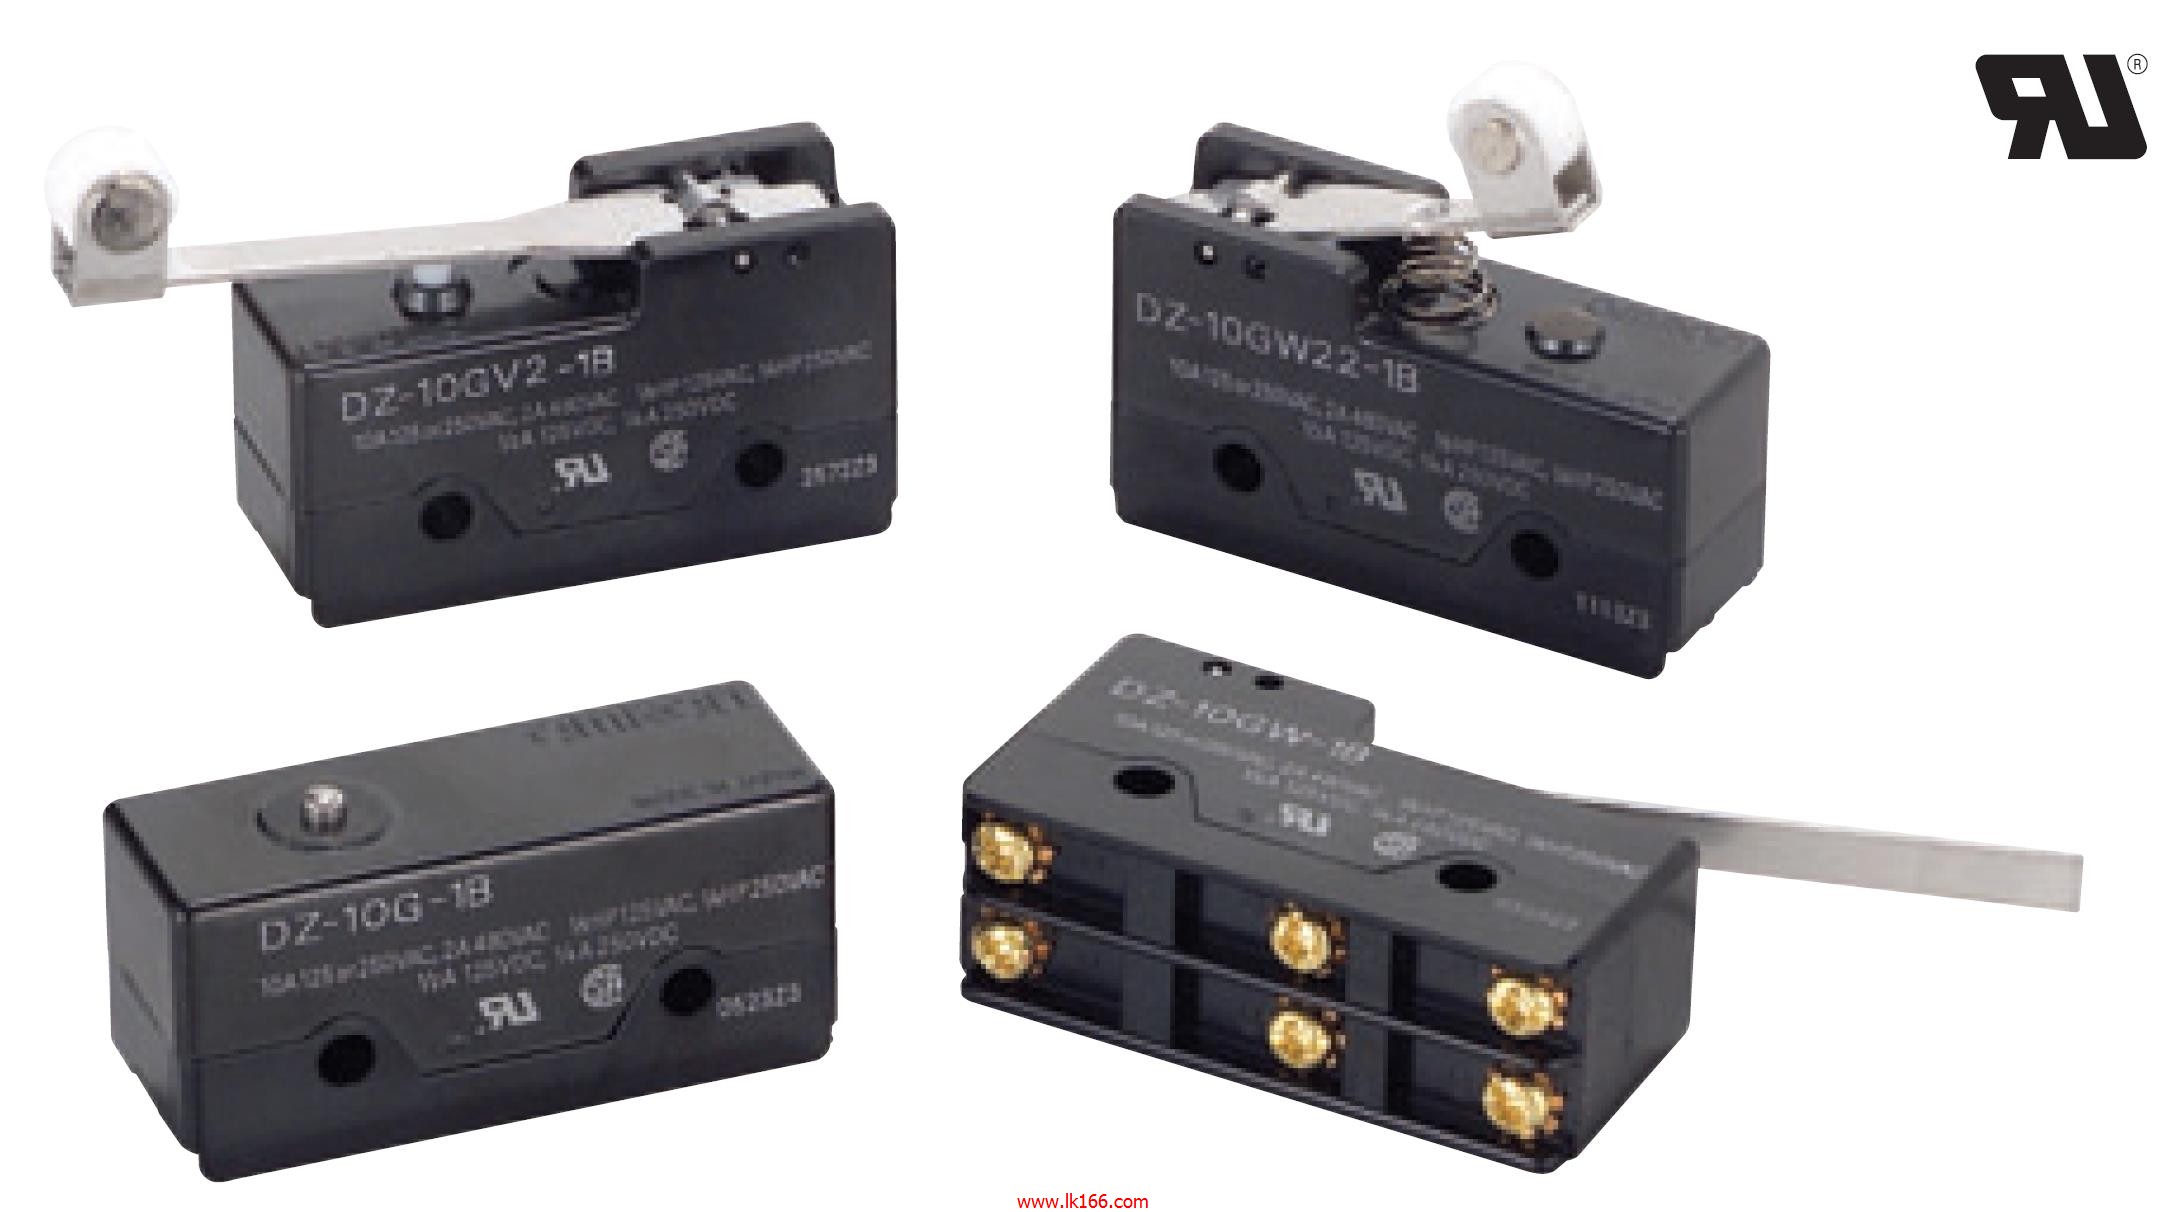 OMRON Special-purpose Basic Switch DZ-10GV22-1B